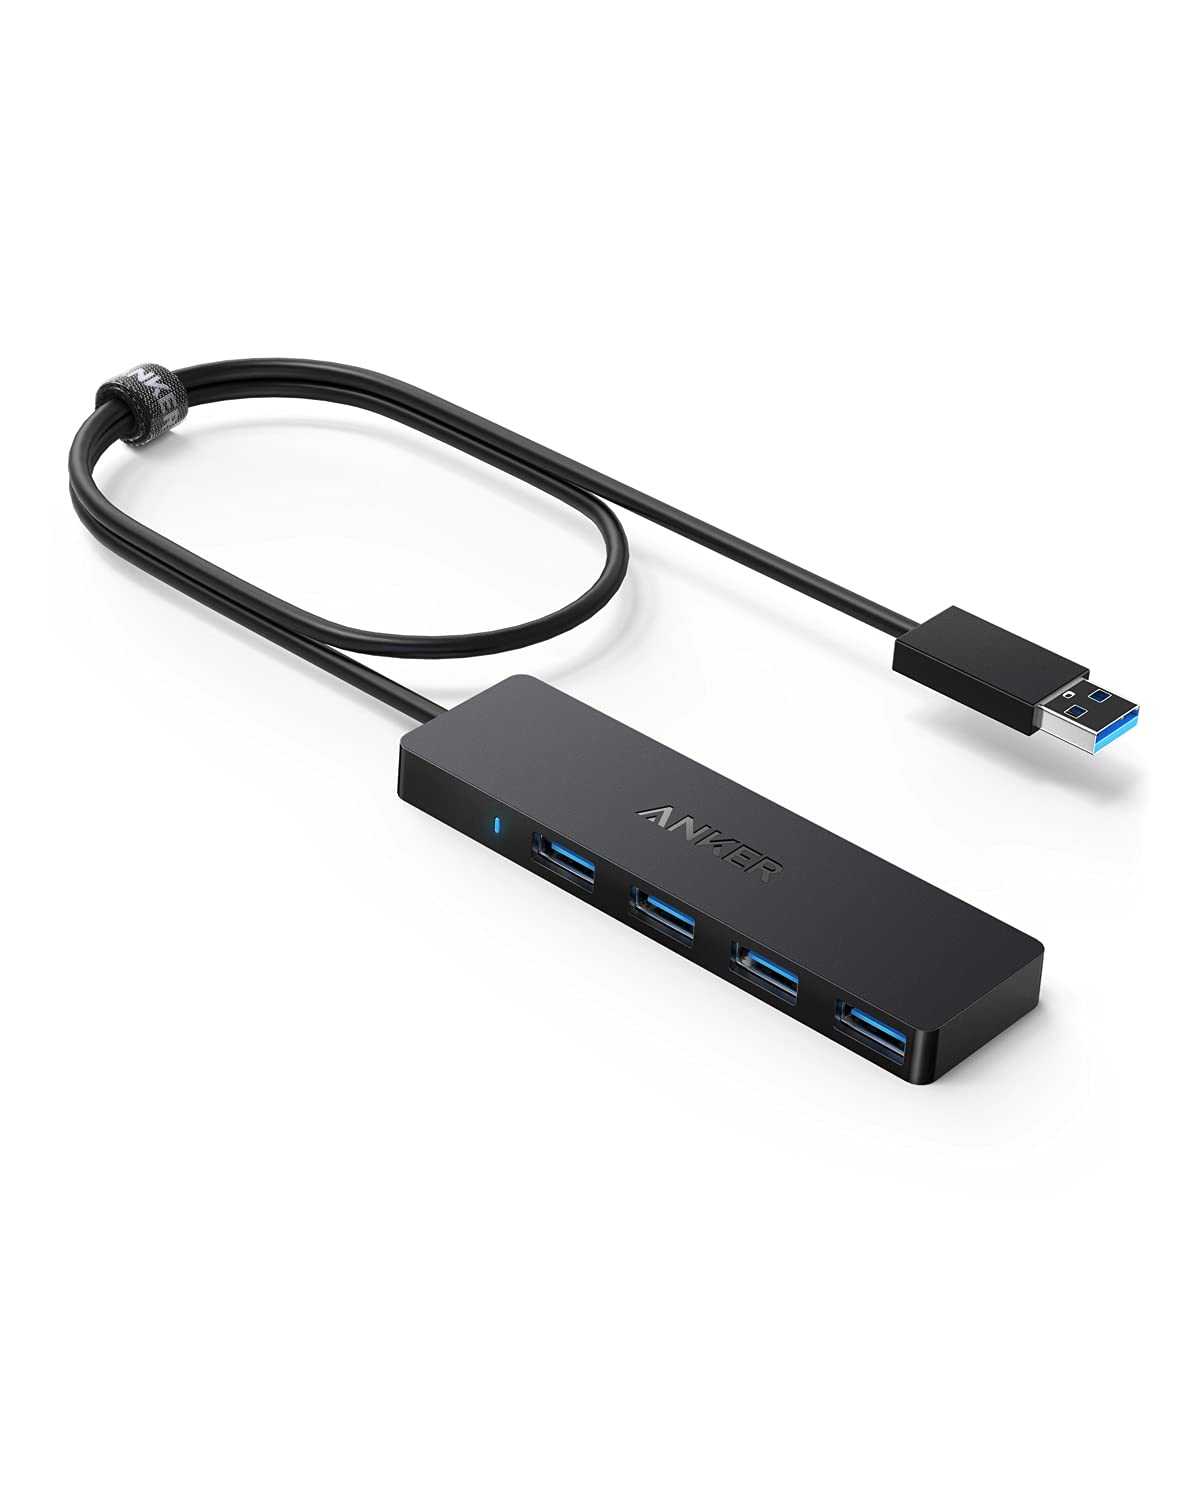 USB3.0 ウルトラスリム 4ポートハブ USB ハブ 60cm ケーブル 5Gbps高速転送 バスパワー 軽量 コンパクト MacBook/iMa…